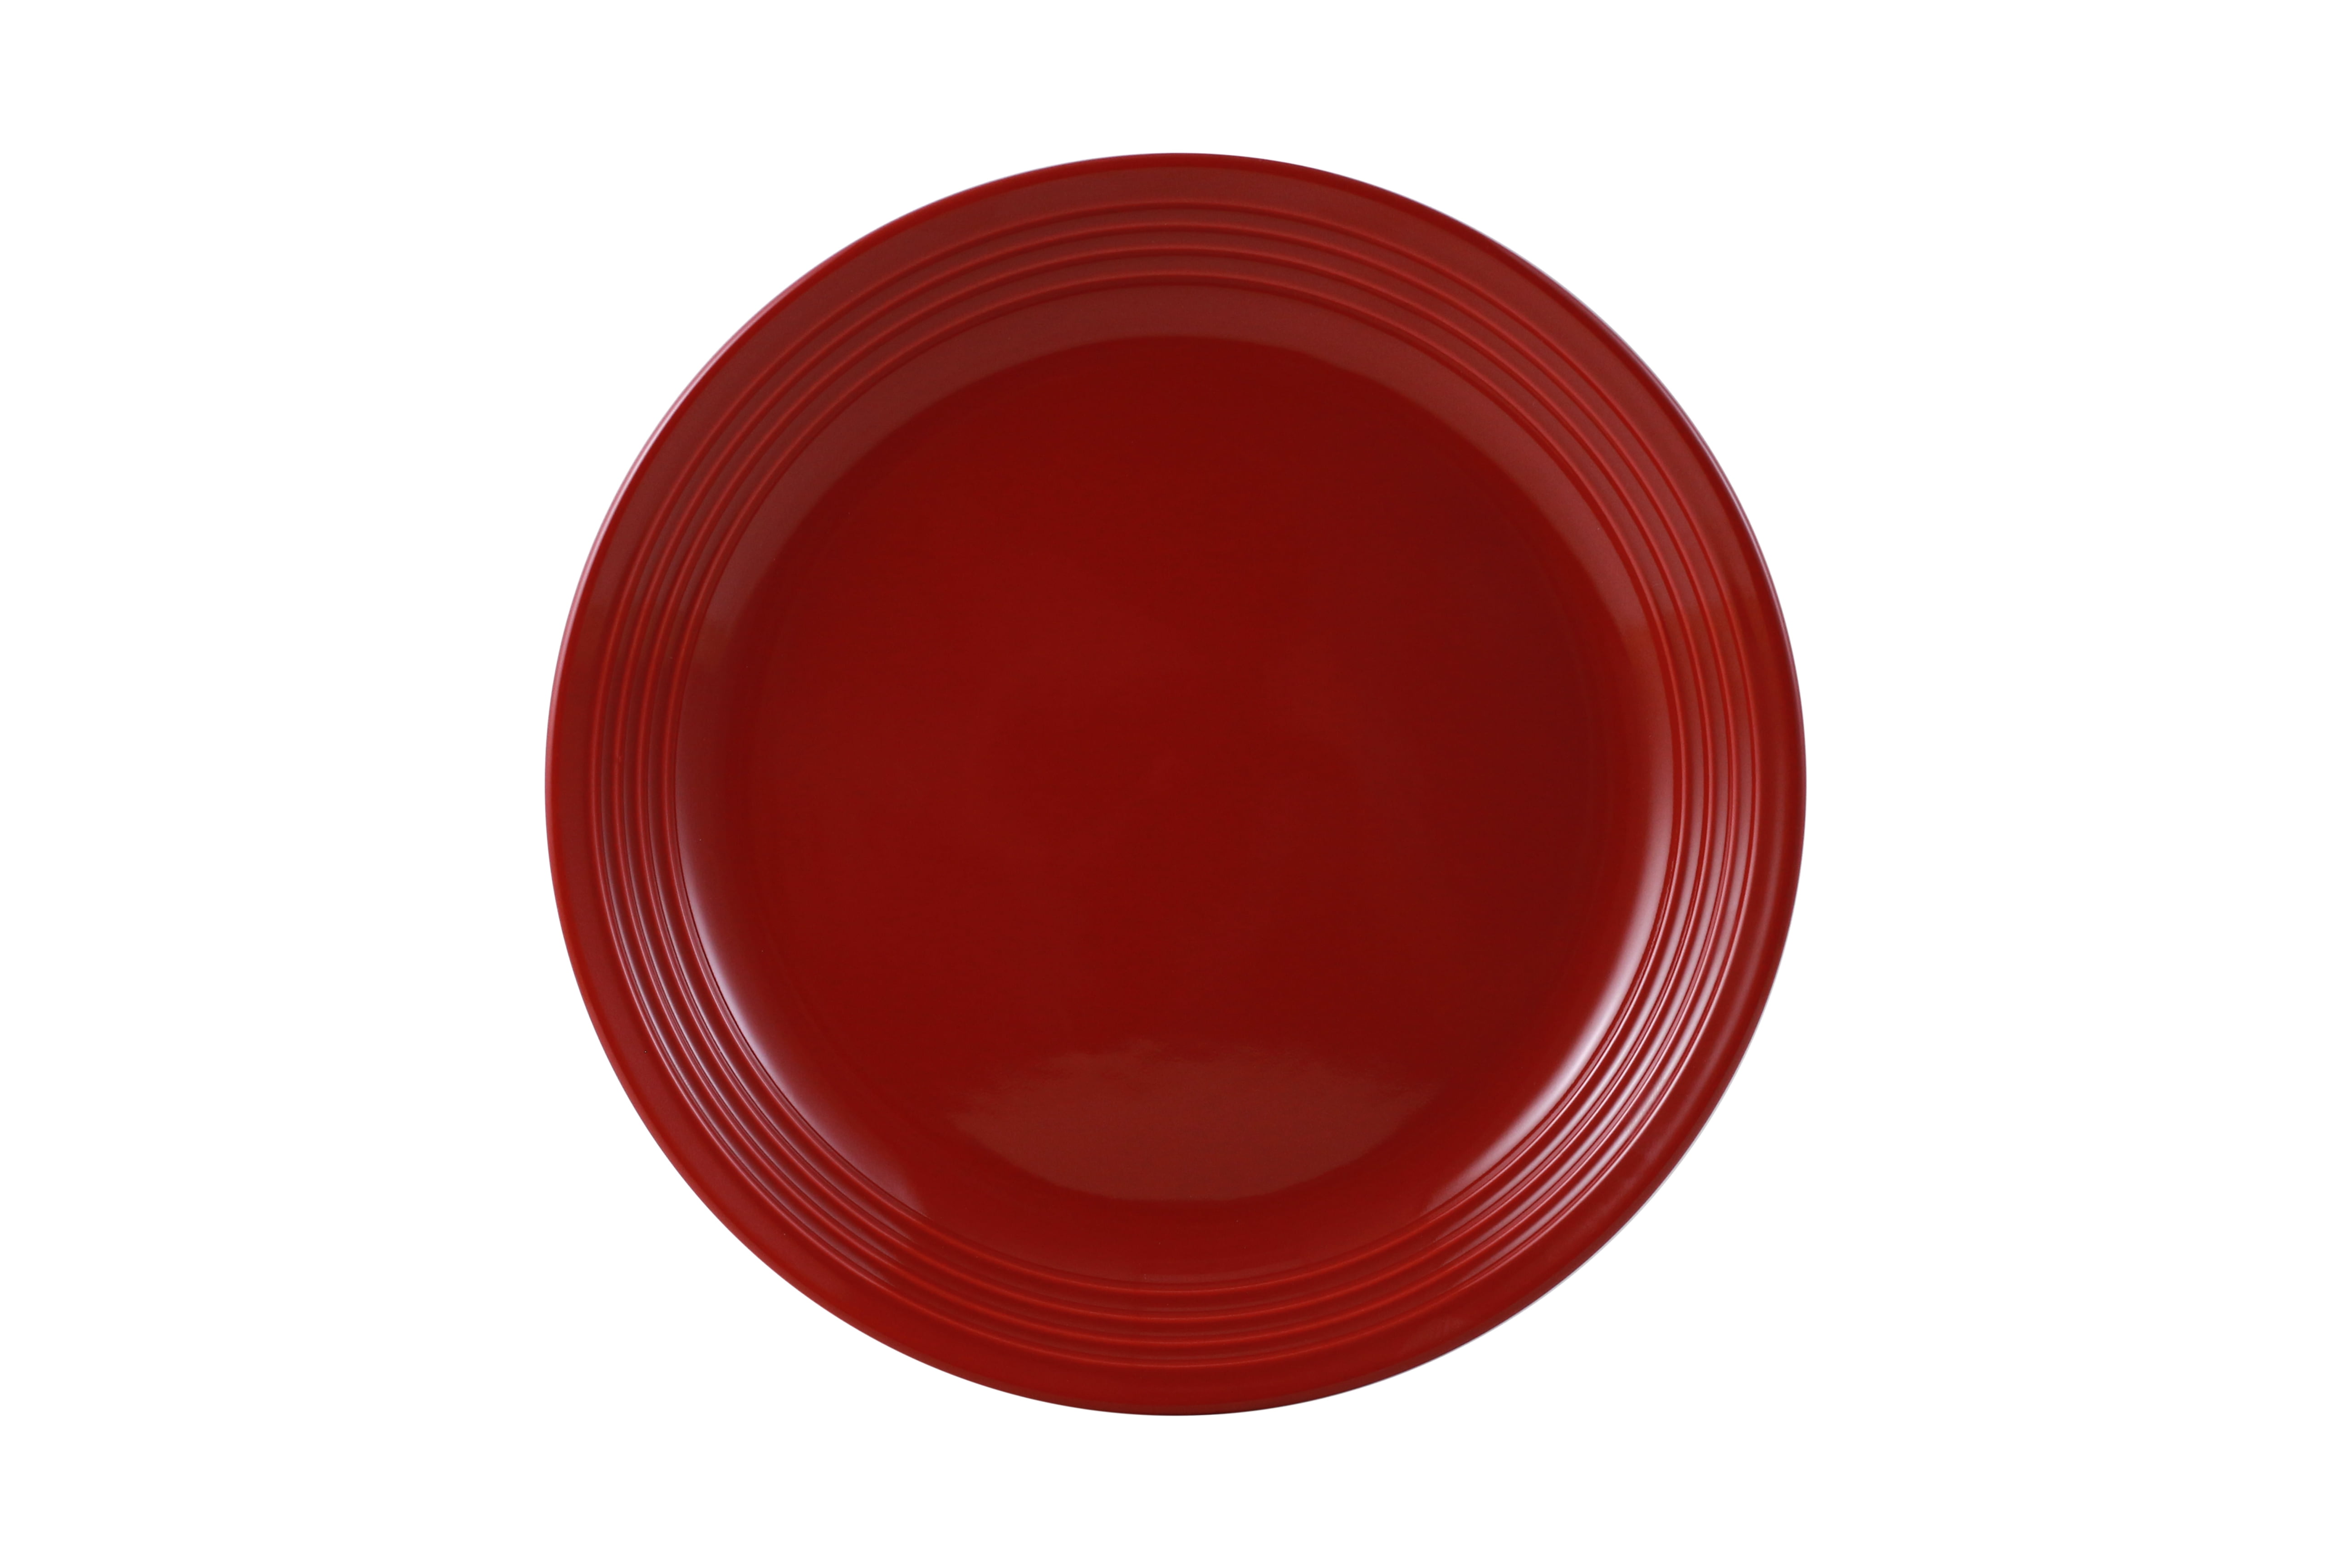 Mainstays Chiara Round Stoneware Red Salad Plate